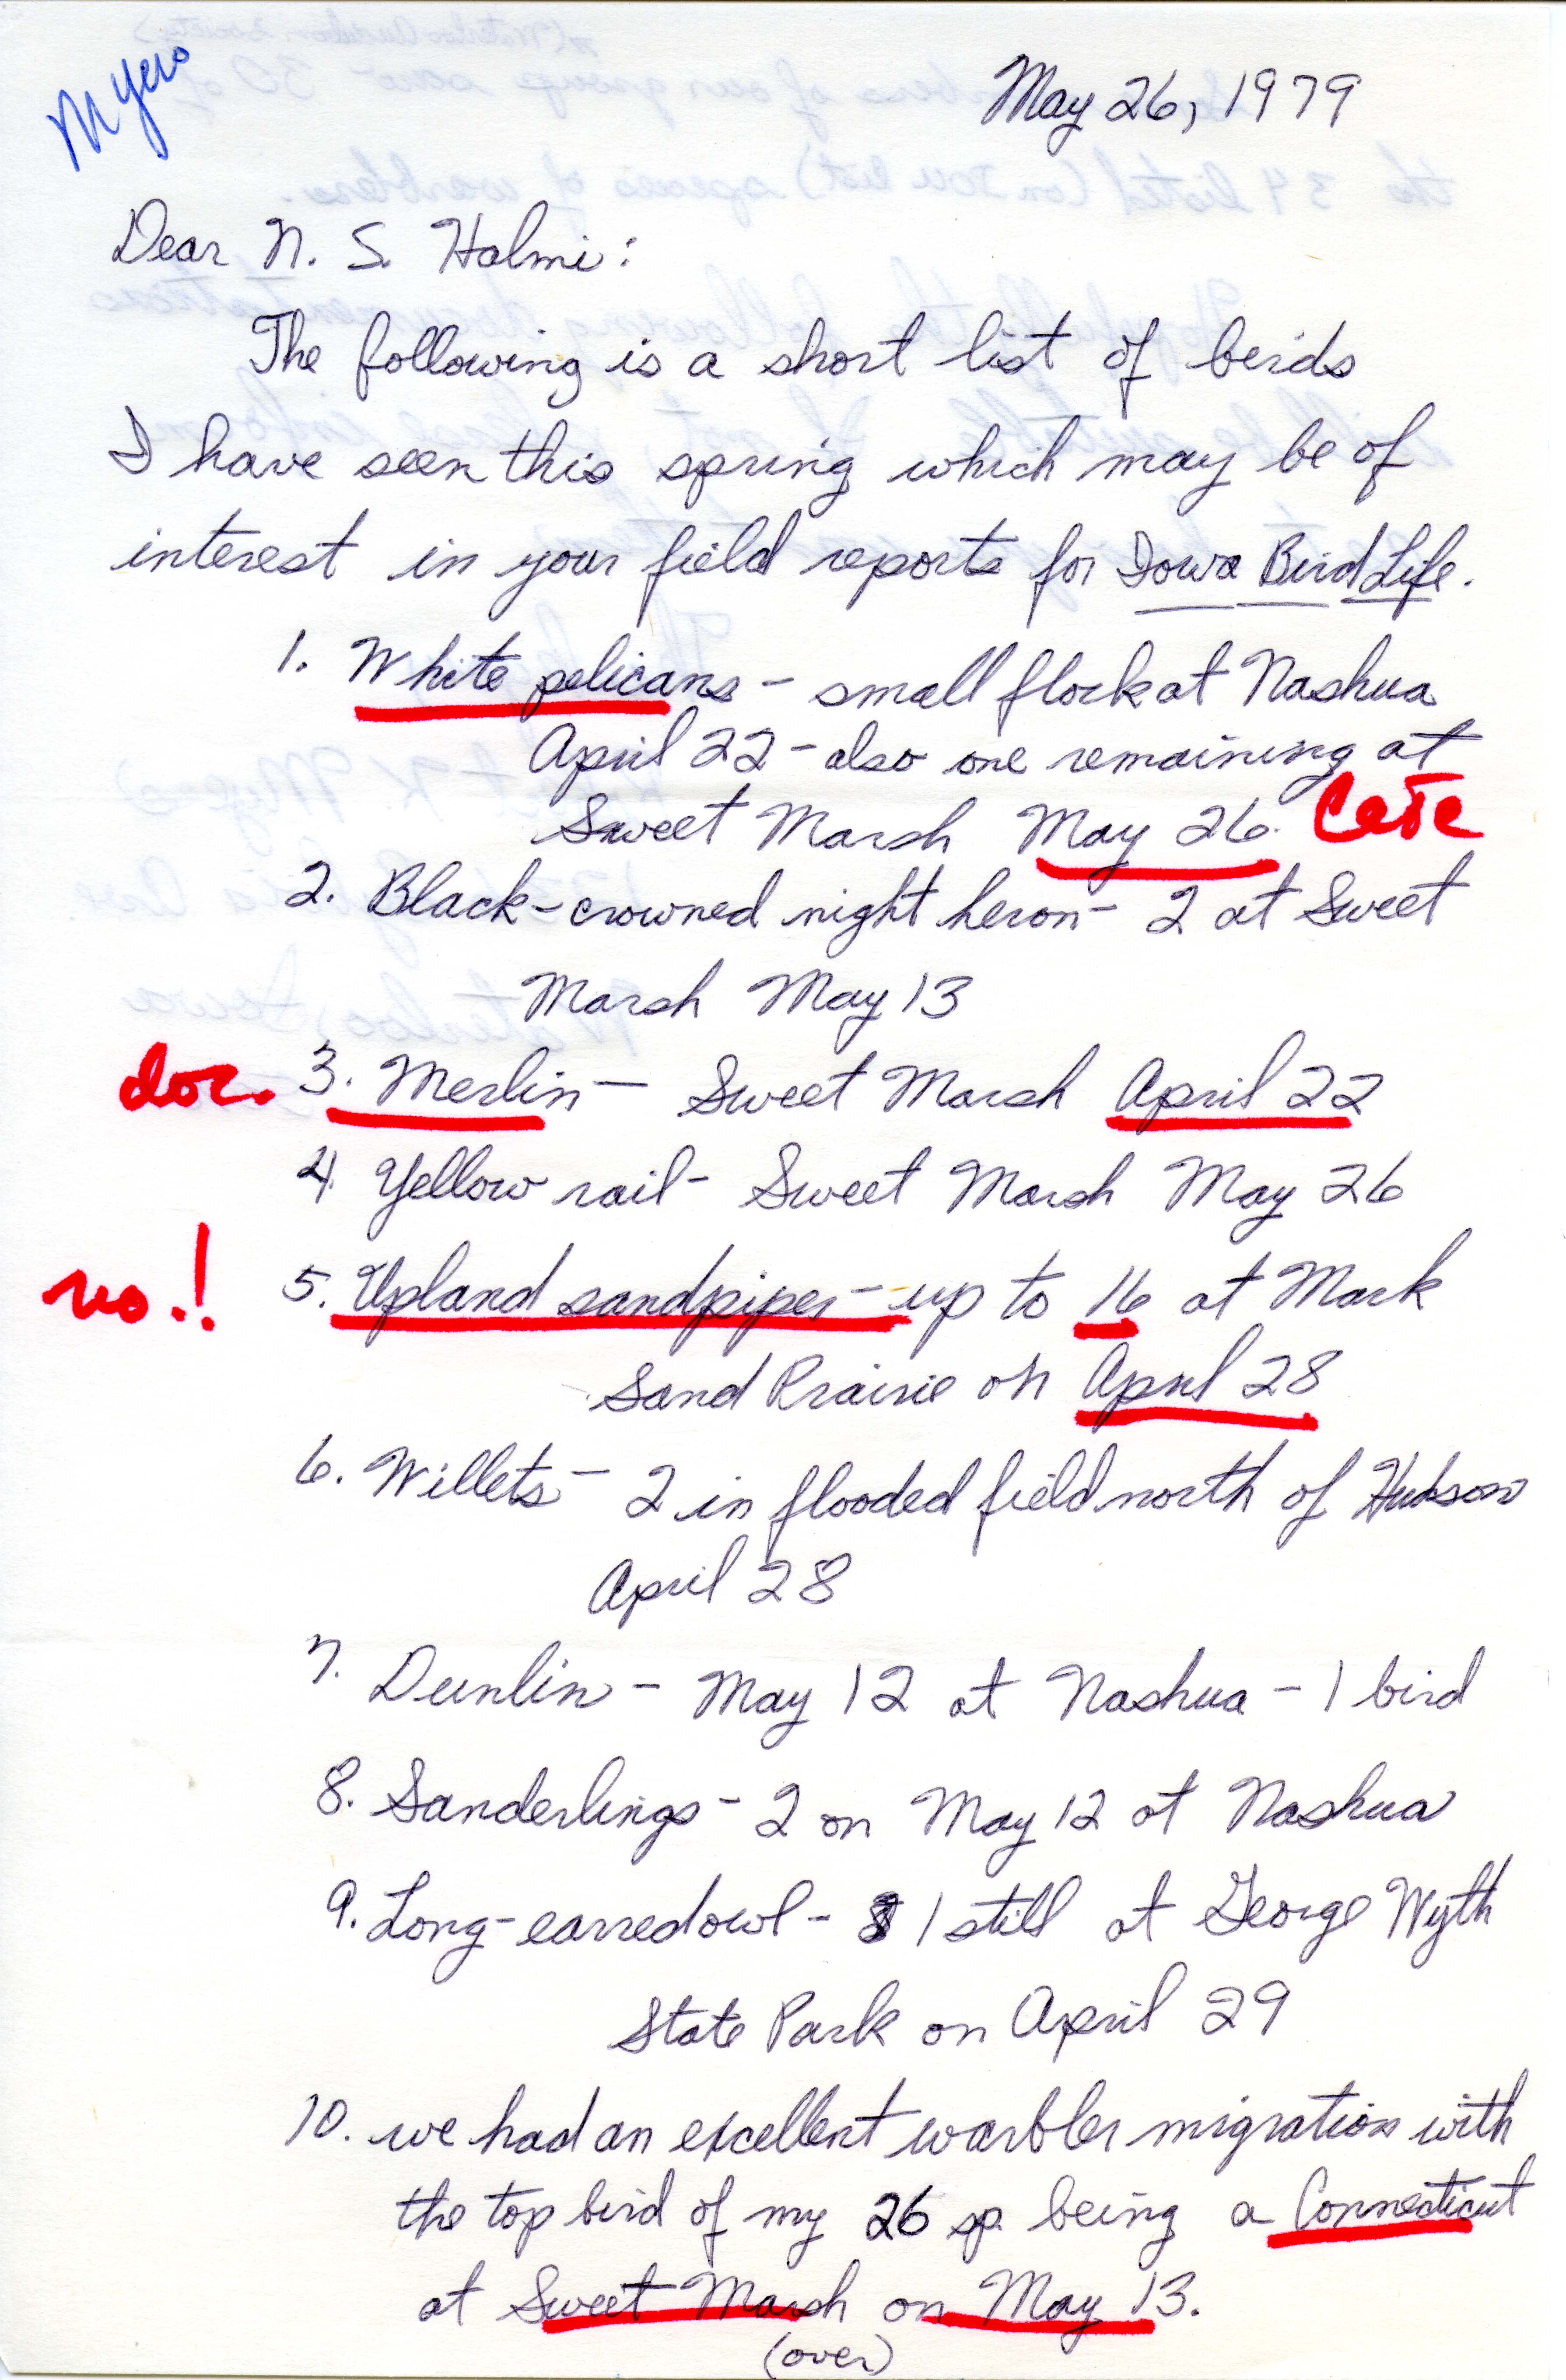 Robert K. Myers letter to Nicholas S. Halmi regarding spring bird sightings, May 26, 1979